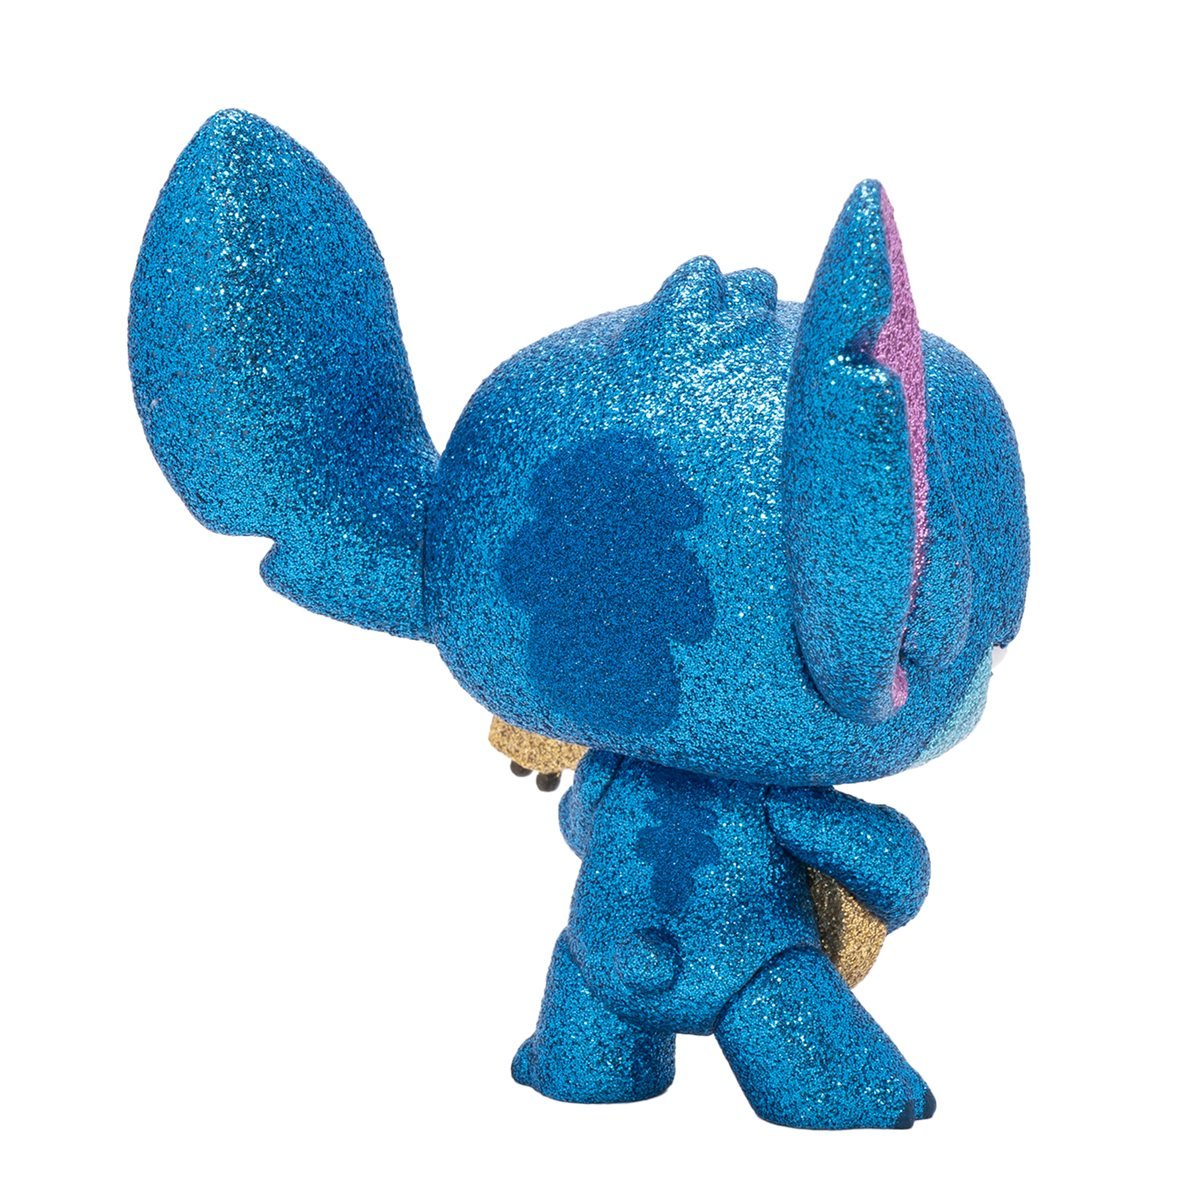 Funko Pop! Disney Stitch Vinyl Figure [Diamond Collection], Blue